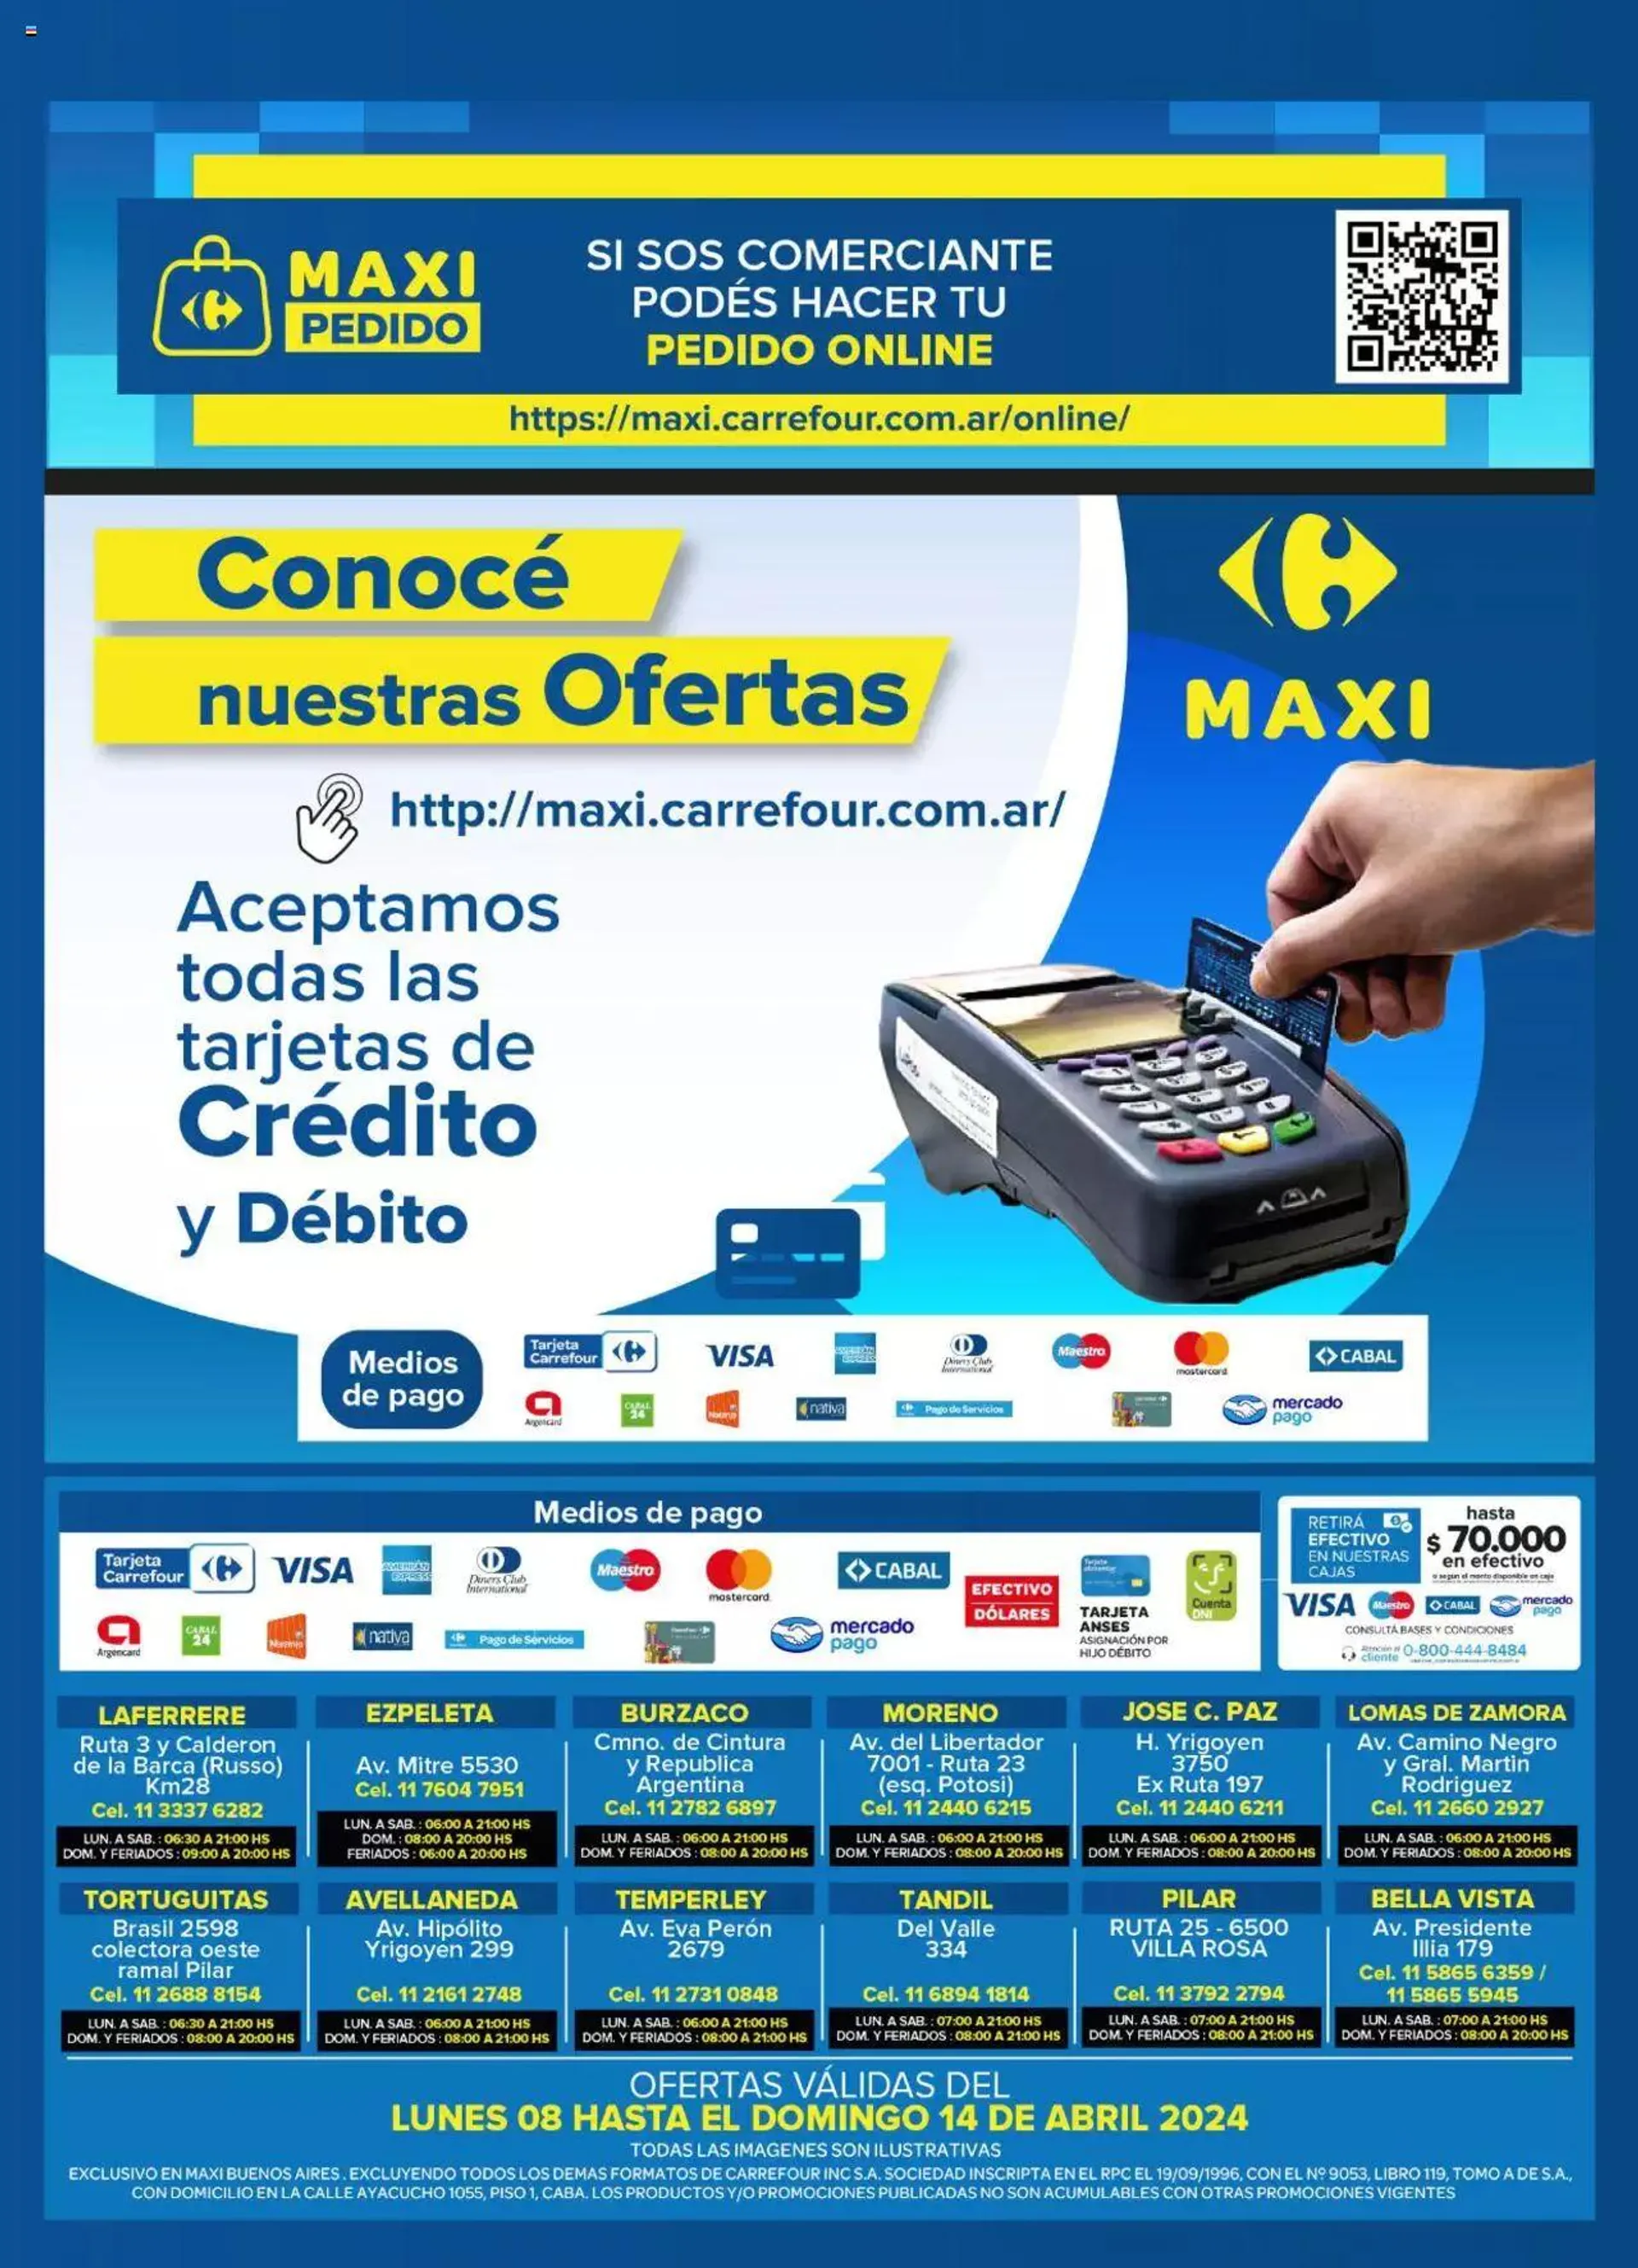 Ofertas de Carrefour Maxi catálogo 8 de abril al 14 de abril 2024 - Página 18 del catálogo